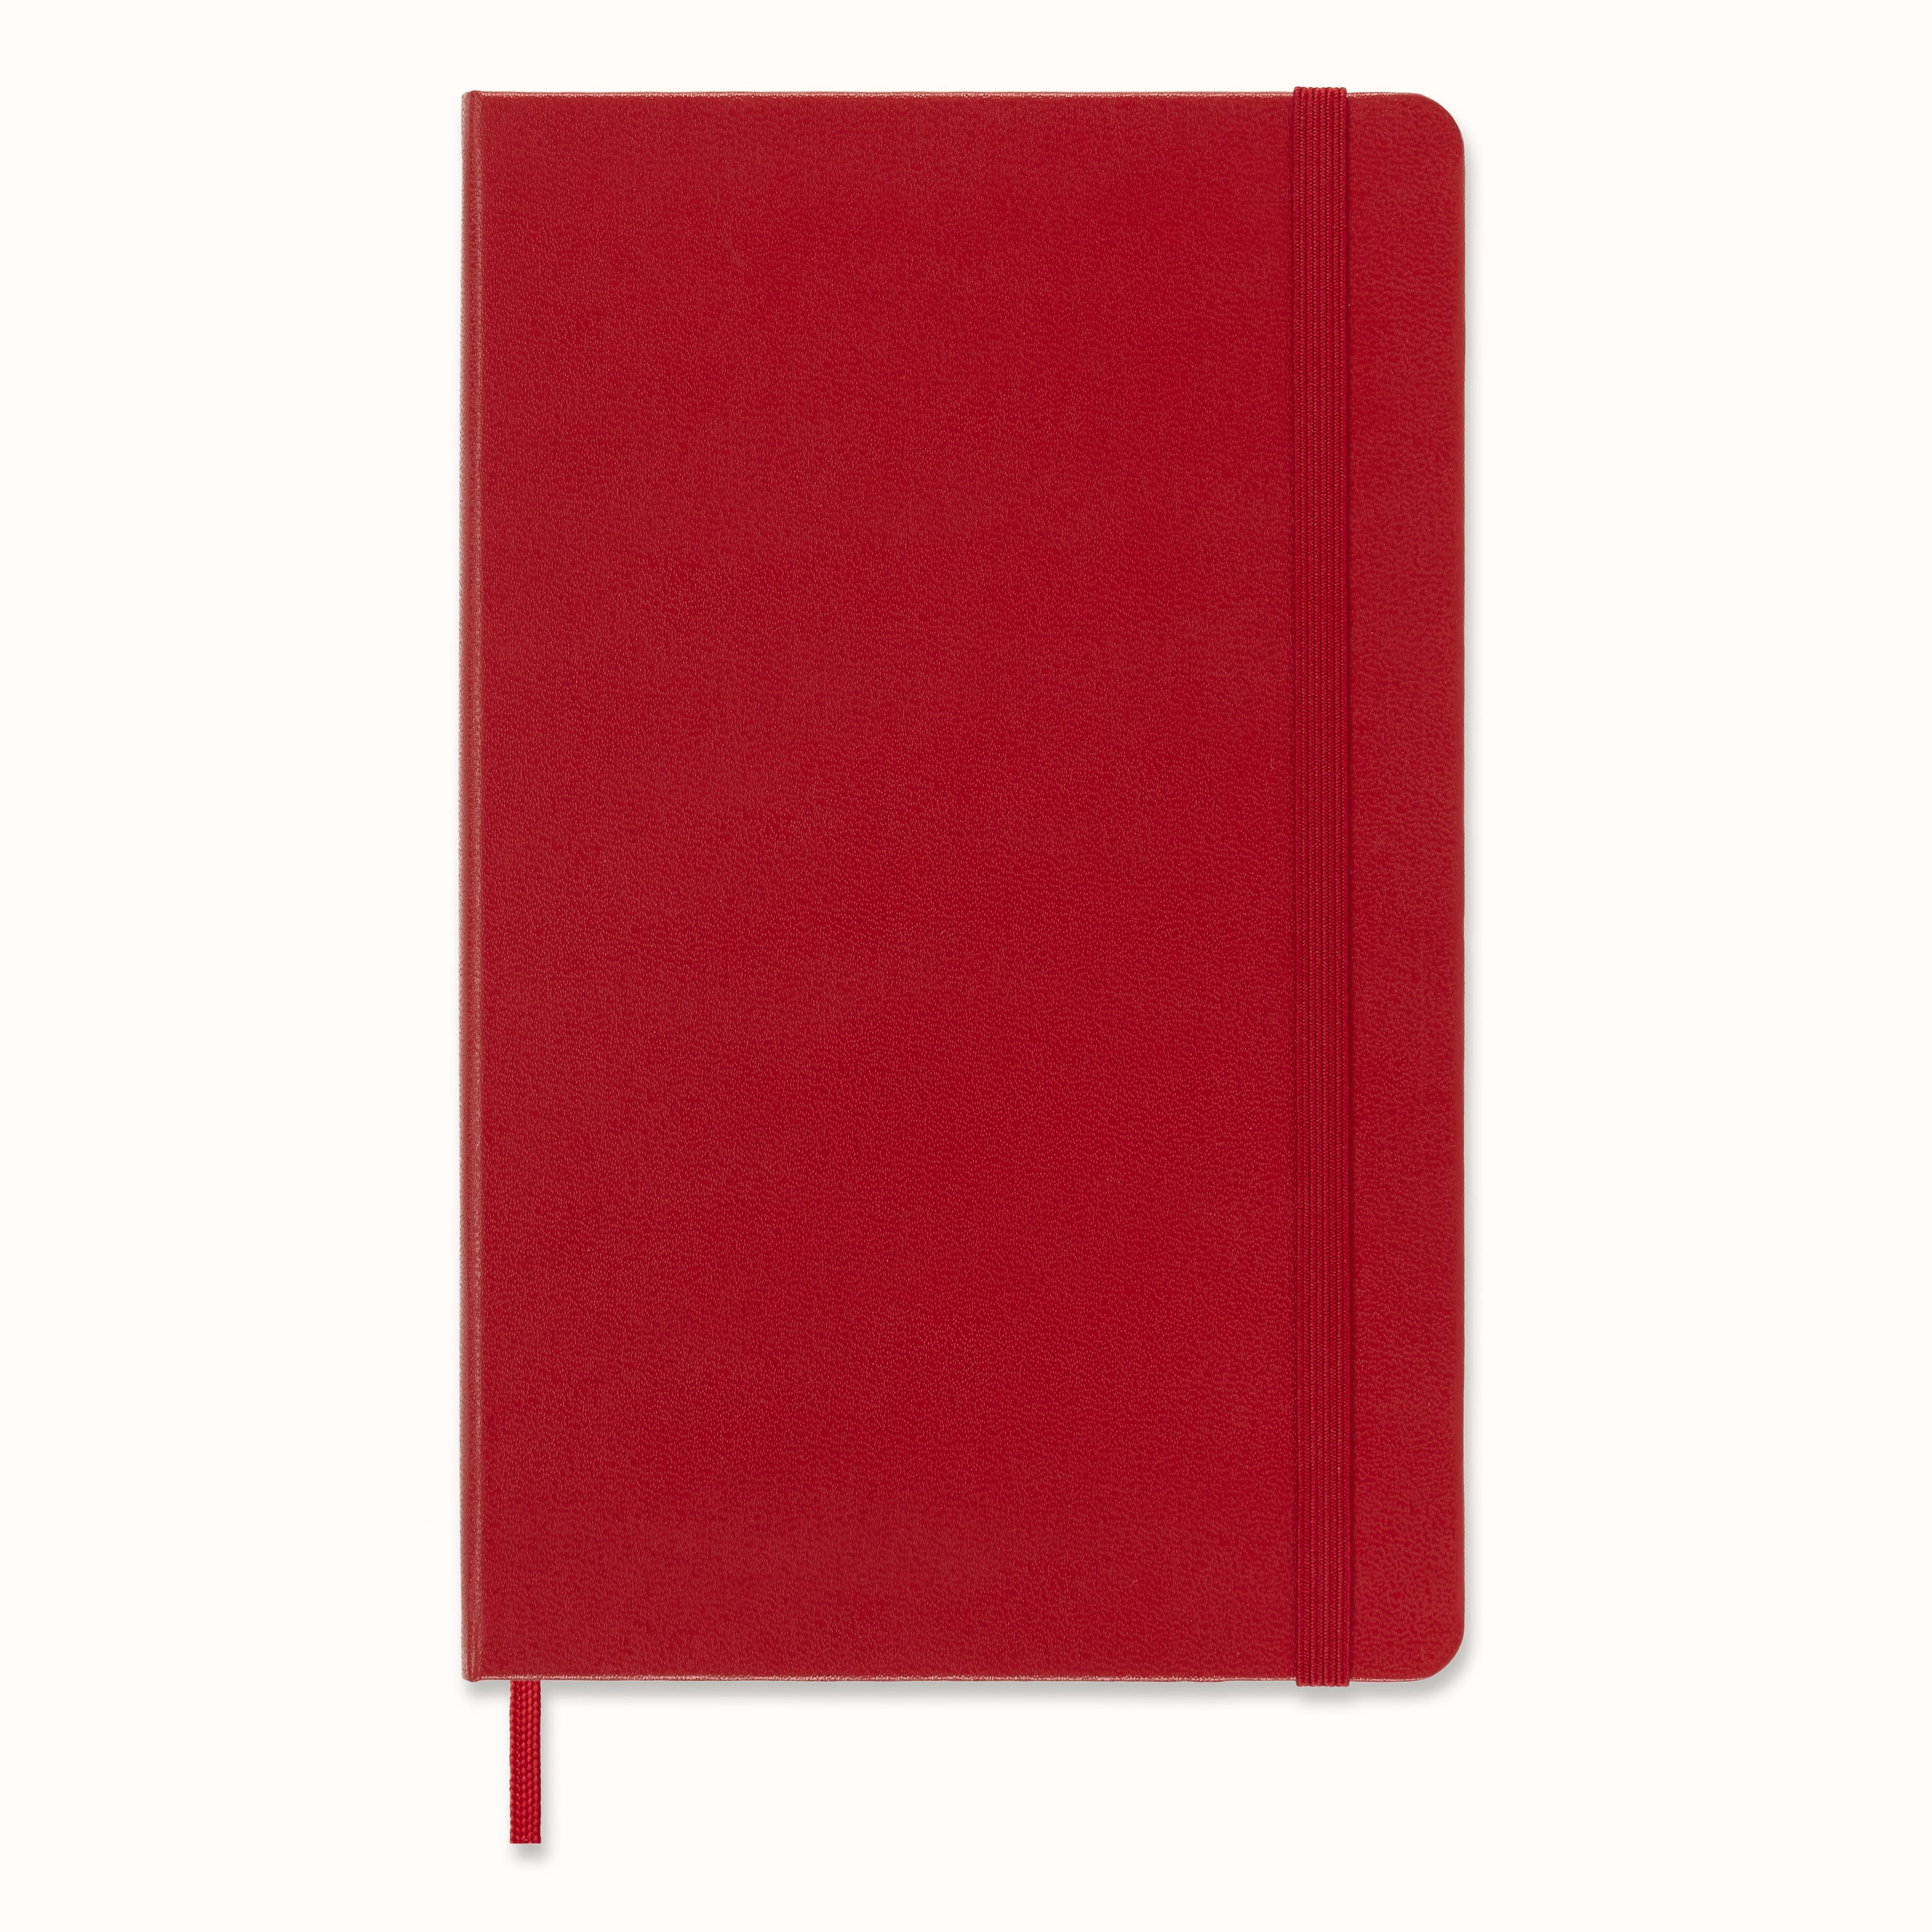 Moleskine Notebook, Medium, Ruled, Scarlet Red, Hard